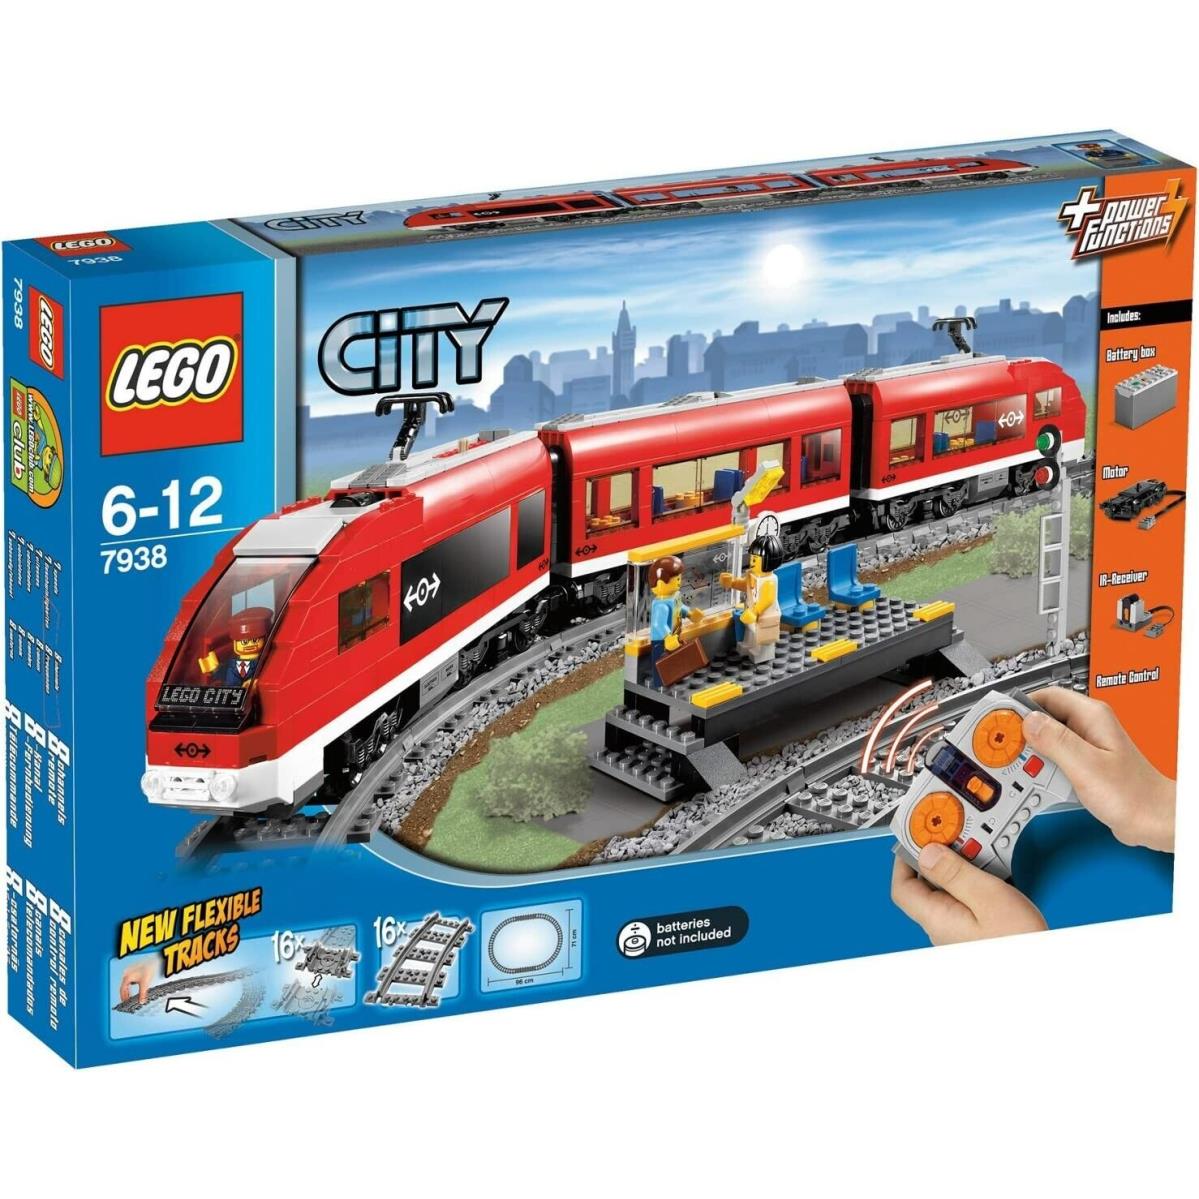 Lego City 7938: Passenger Train Retired Hard to Find Building Set